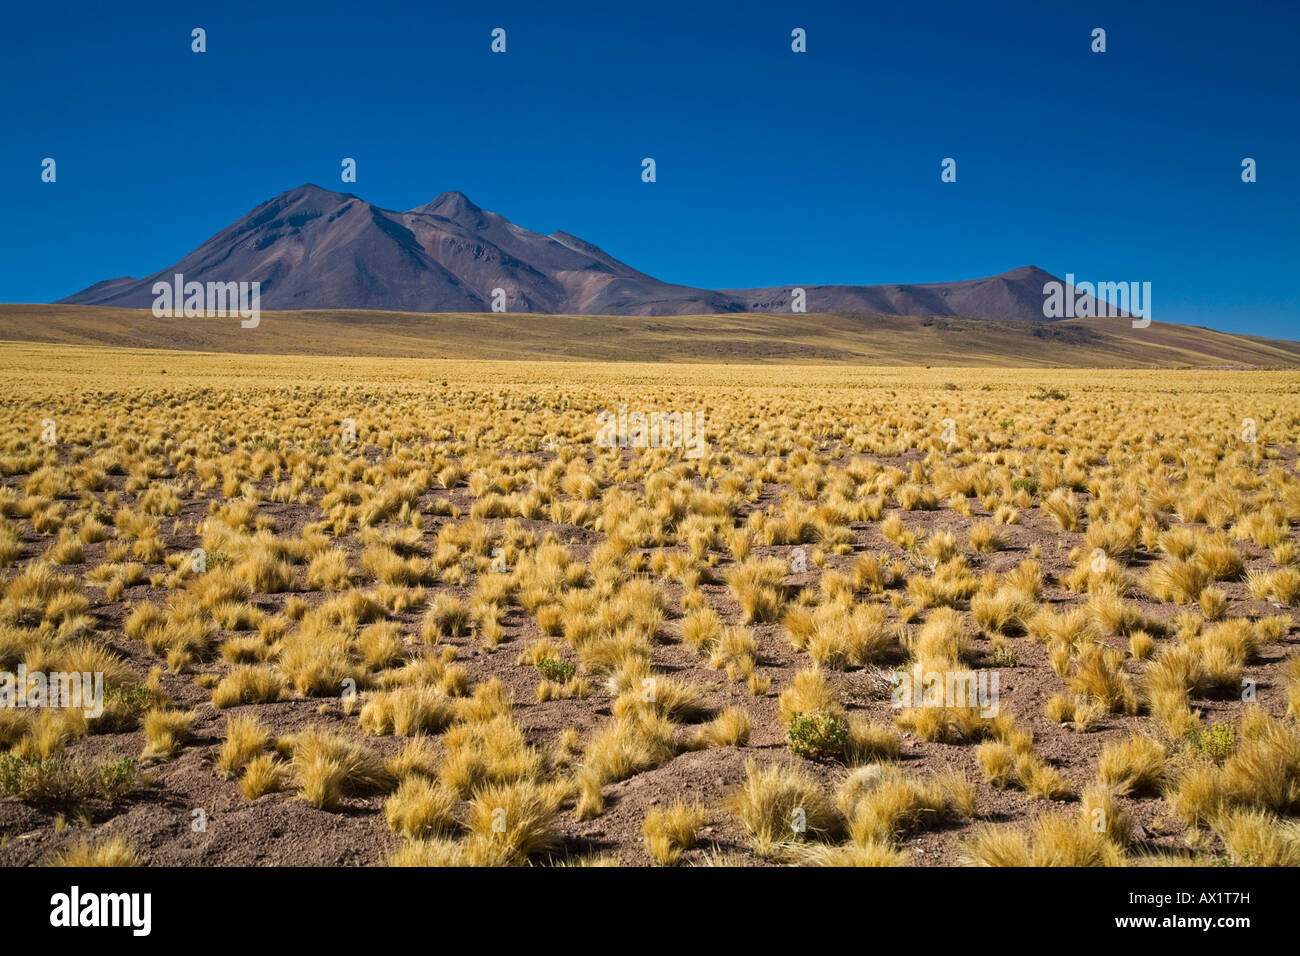 Desert landscape with mountains Cerro Miscanti and Cerro Meniques, Chile, South America Stock Photo